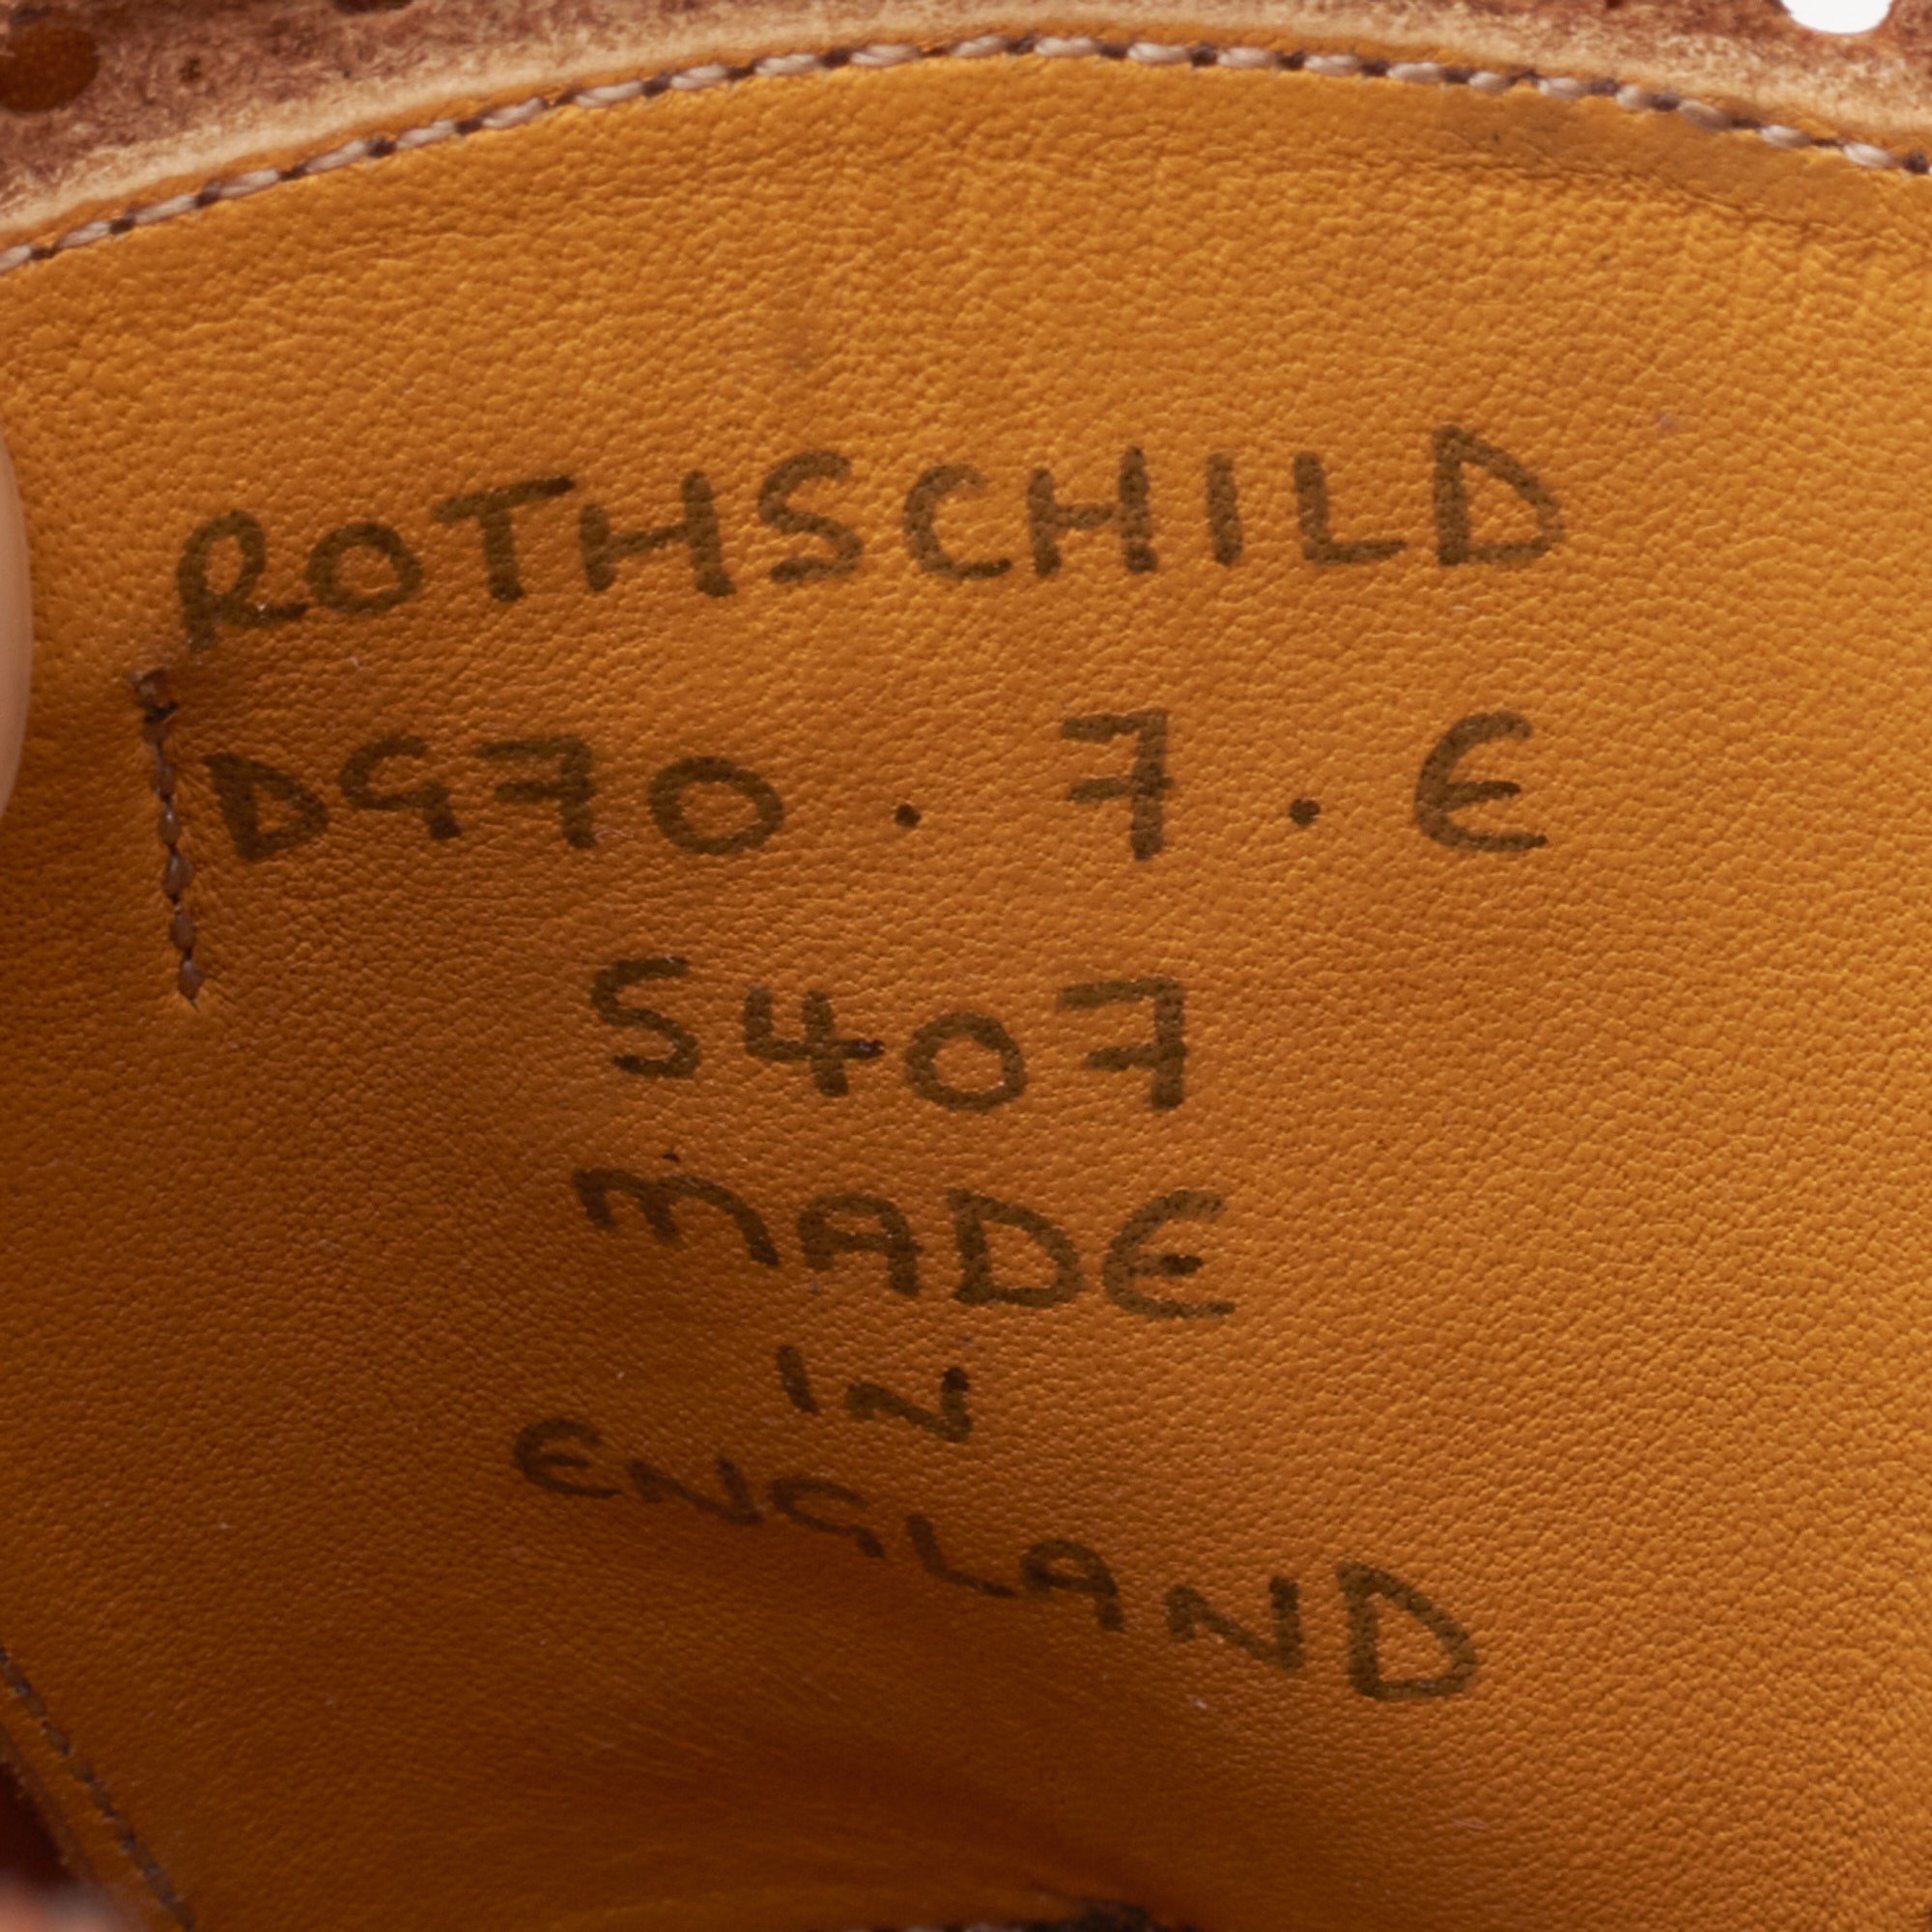 GAZIANO & GIRLING "Rothschild" Brown Oxford Dress Shoes UK 7E US 7.5 Last DG70 GAZIANO & GIRLING